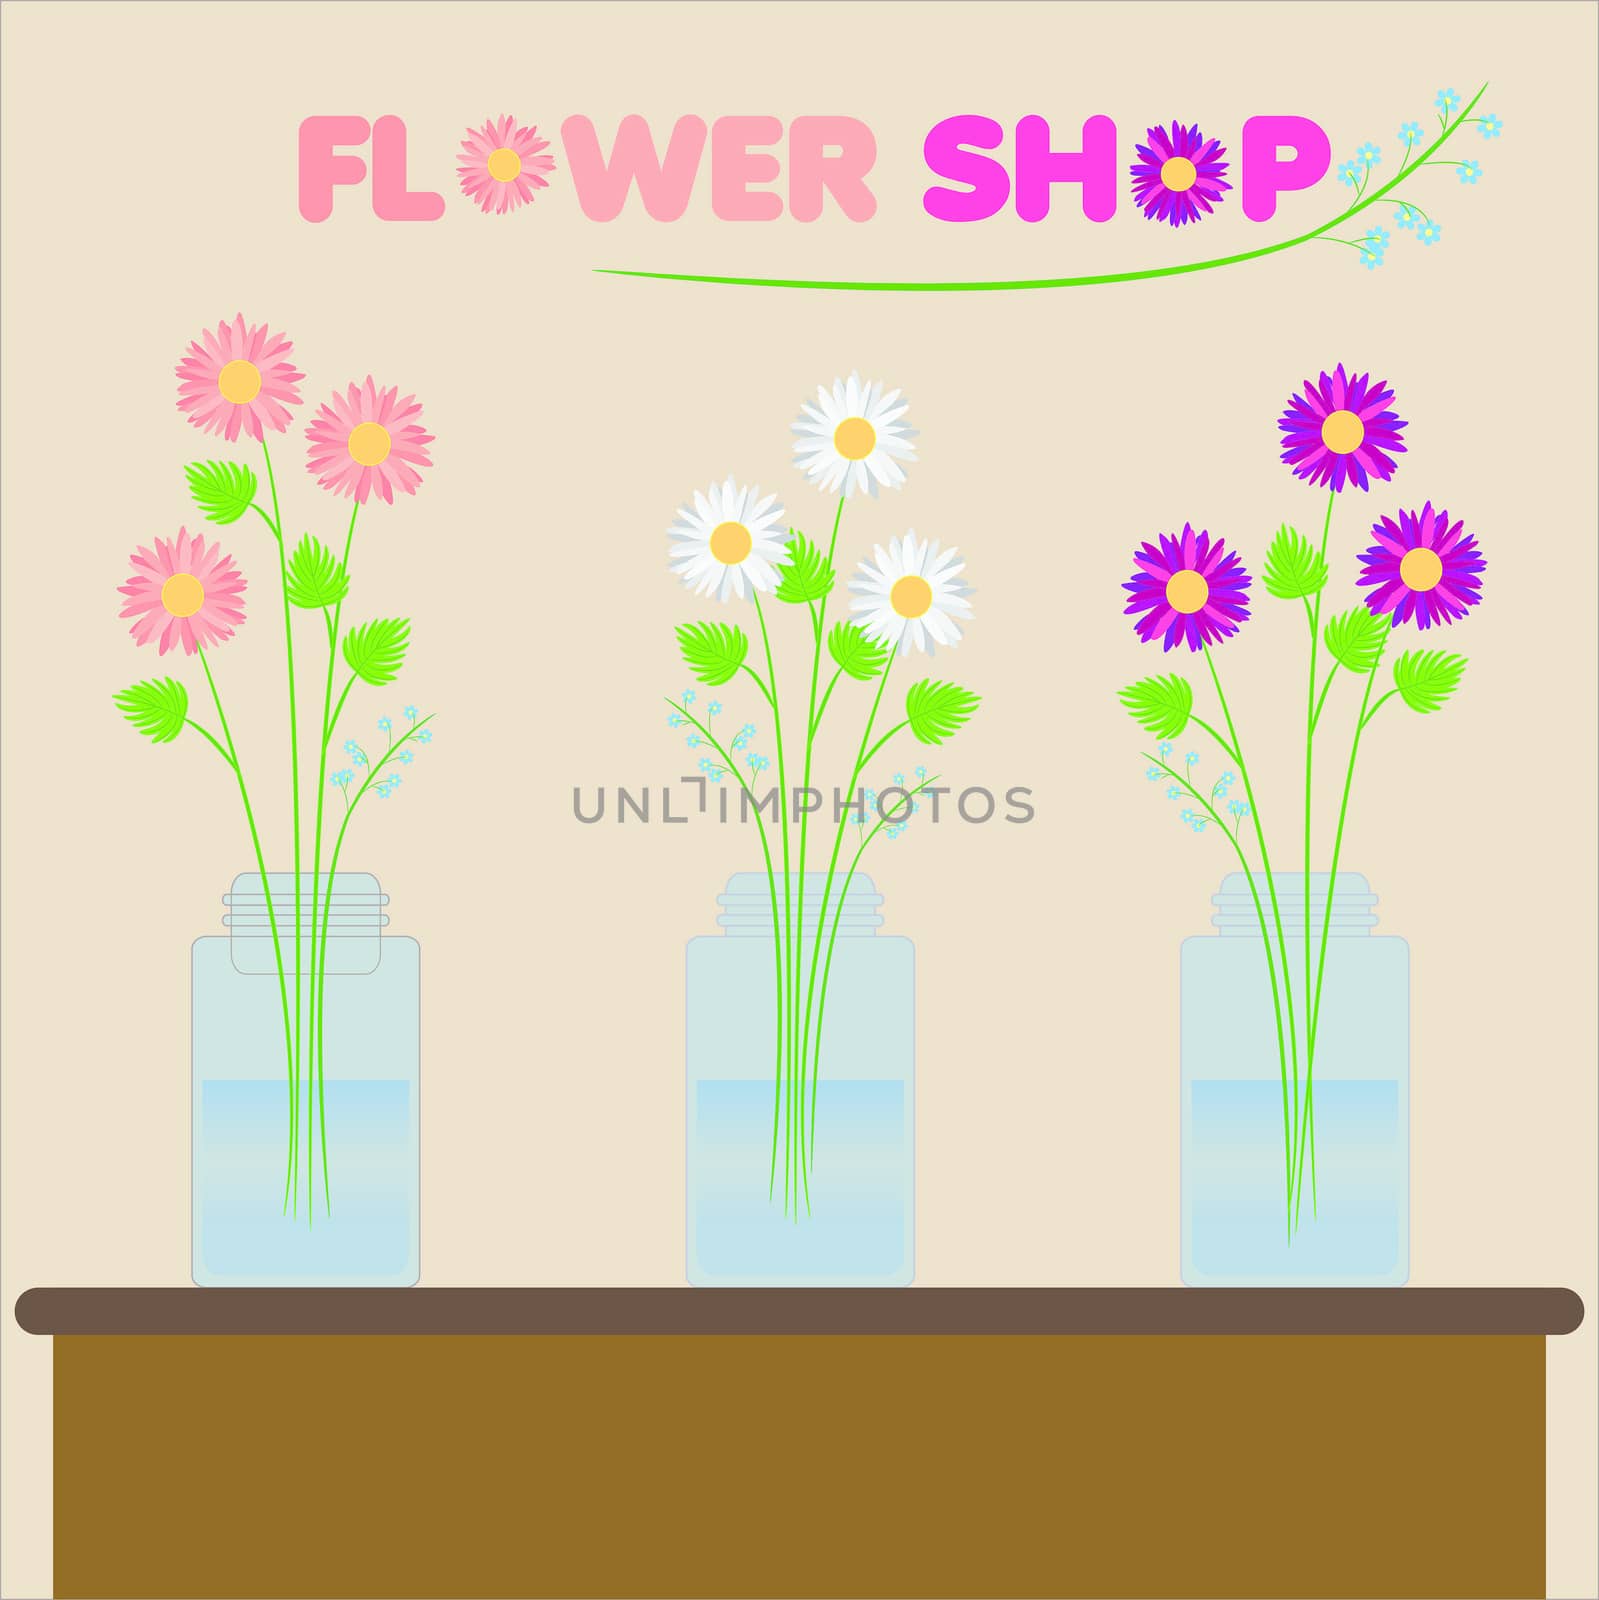 Flower shop by siiixth